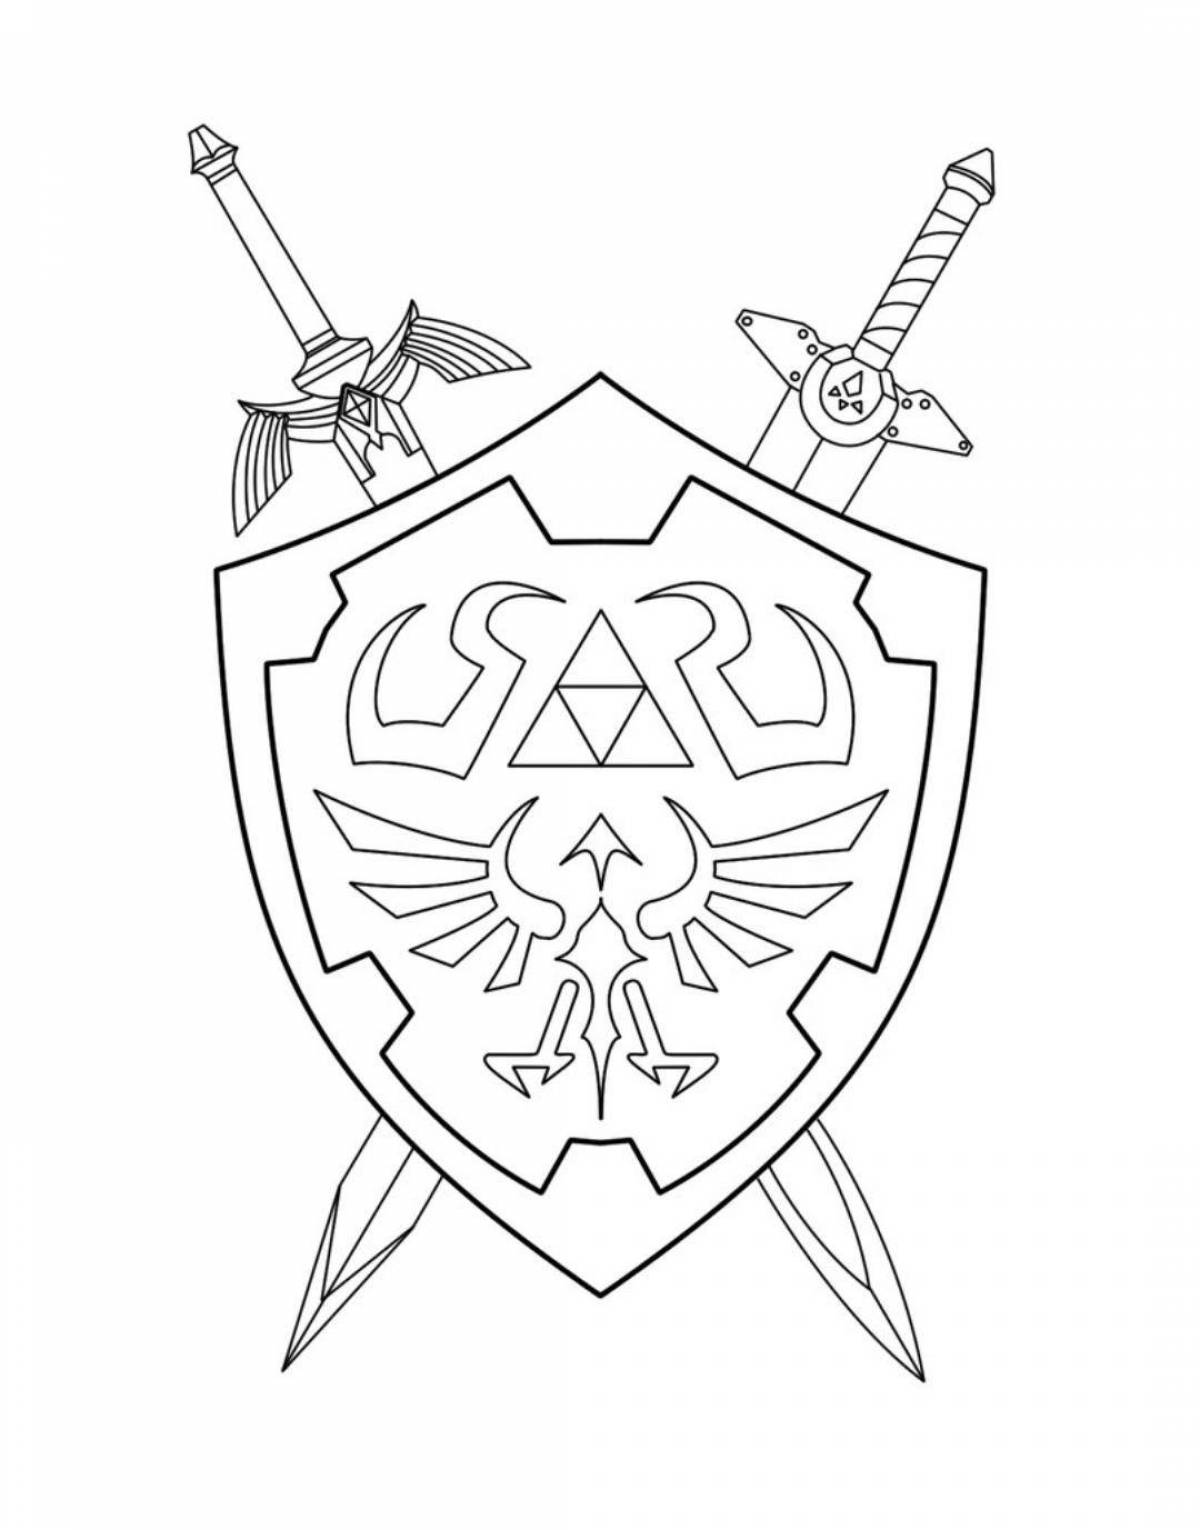 Knight crest #2